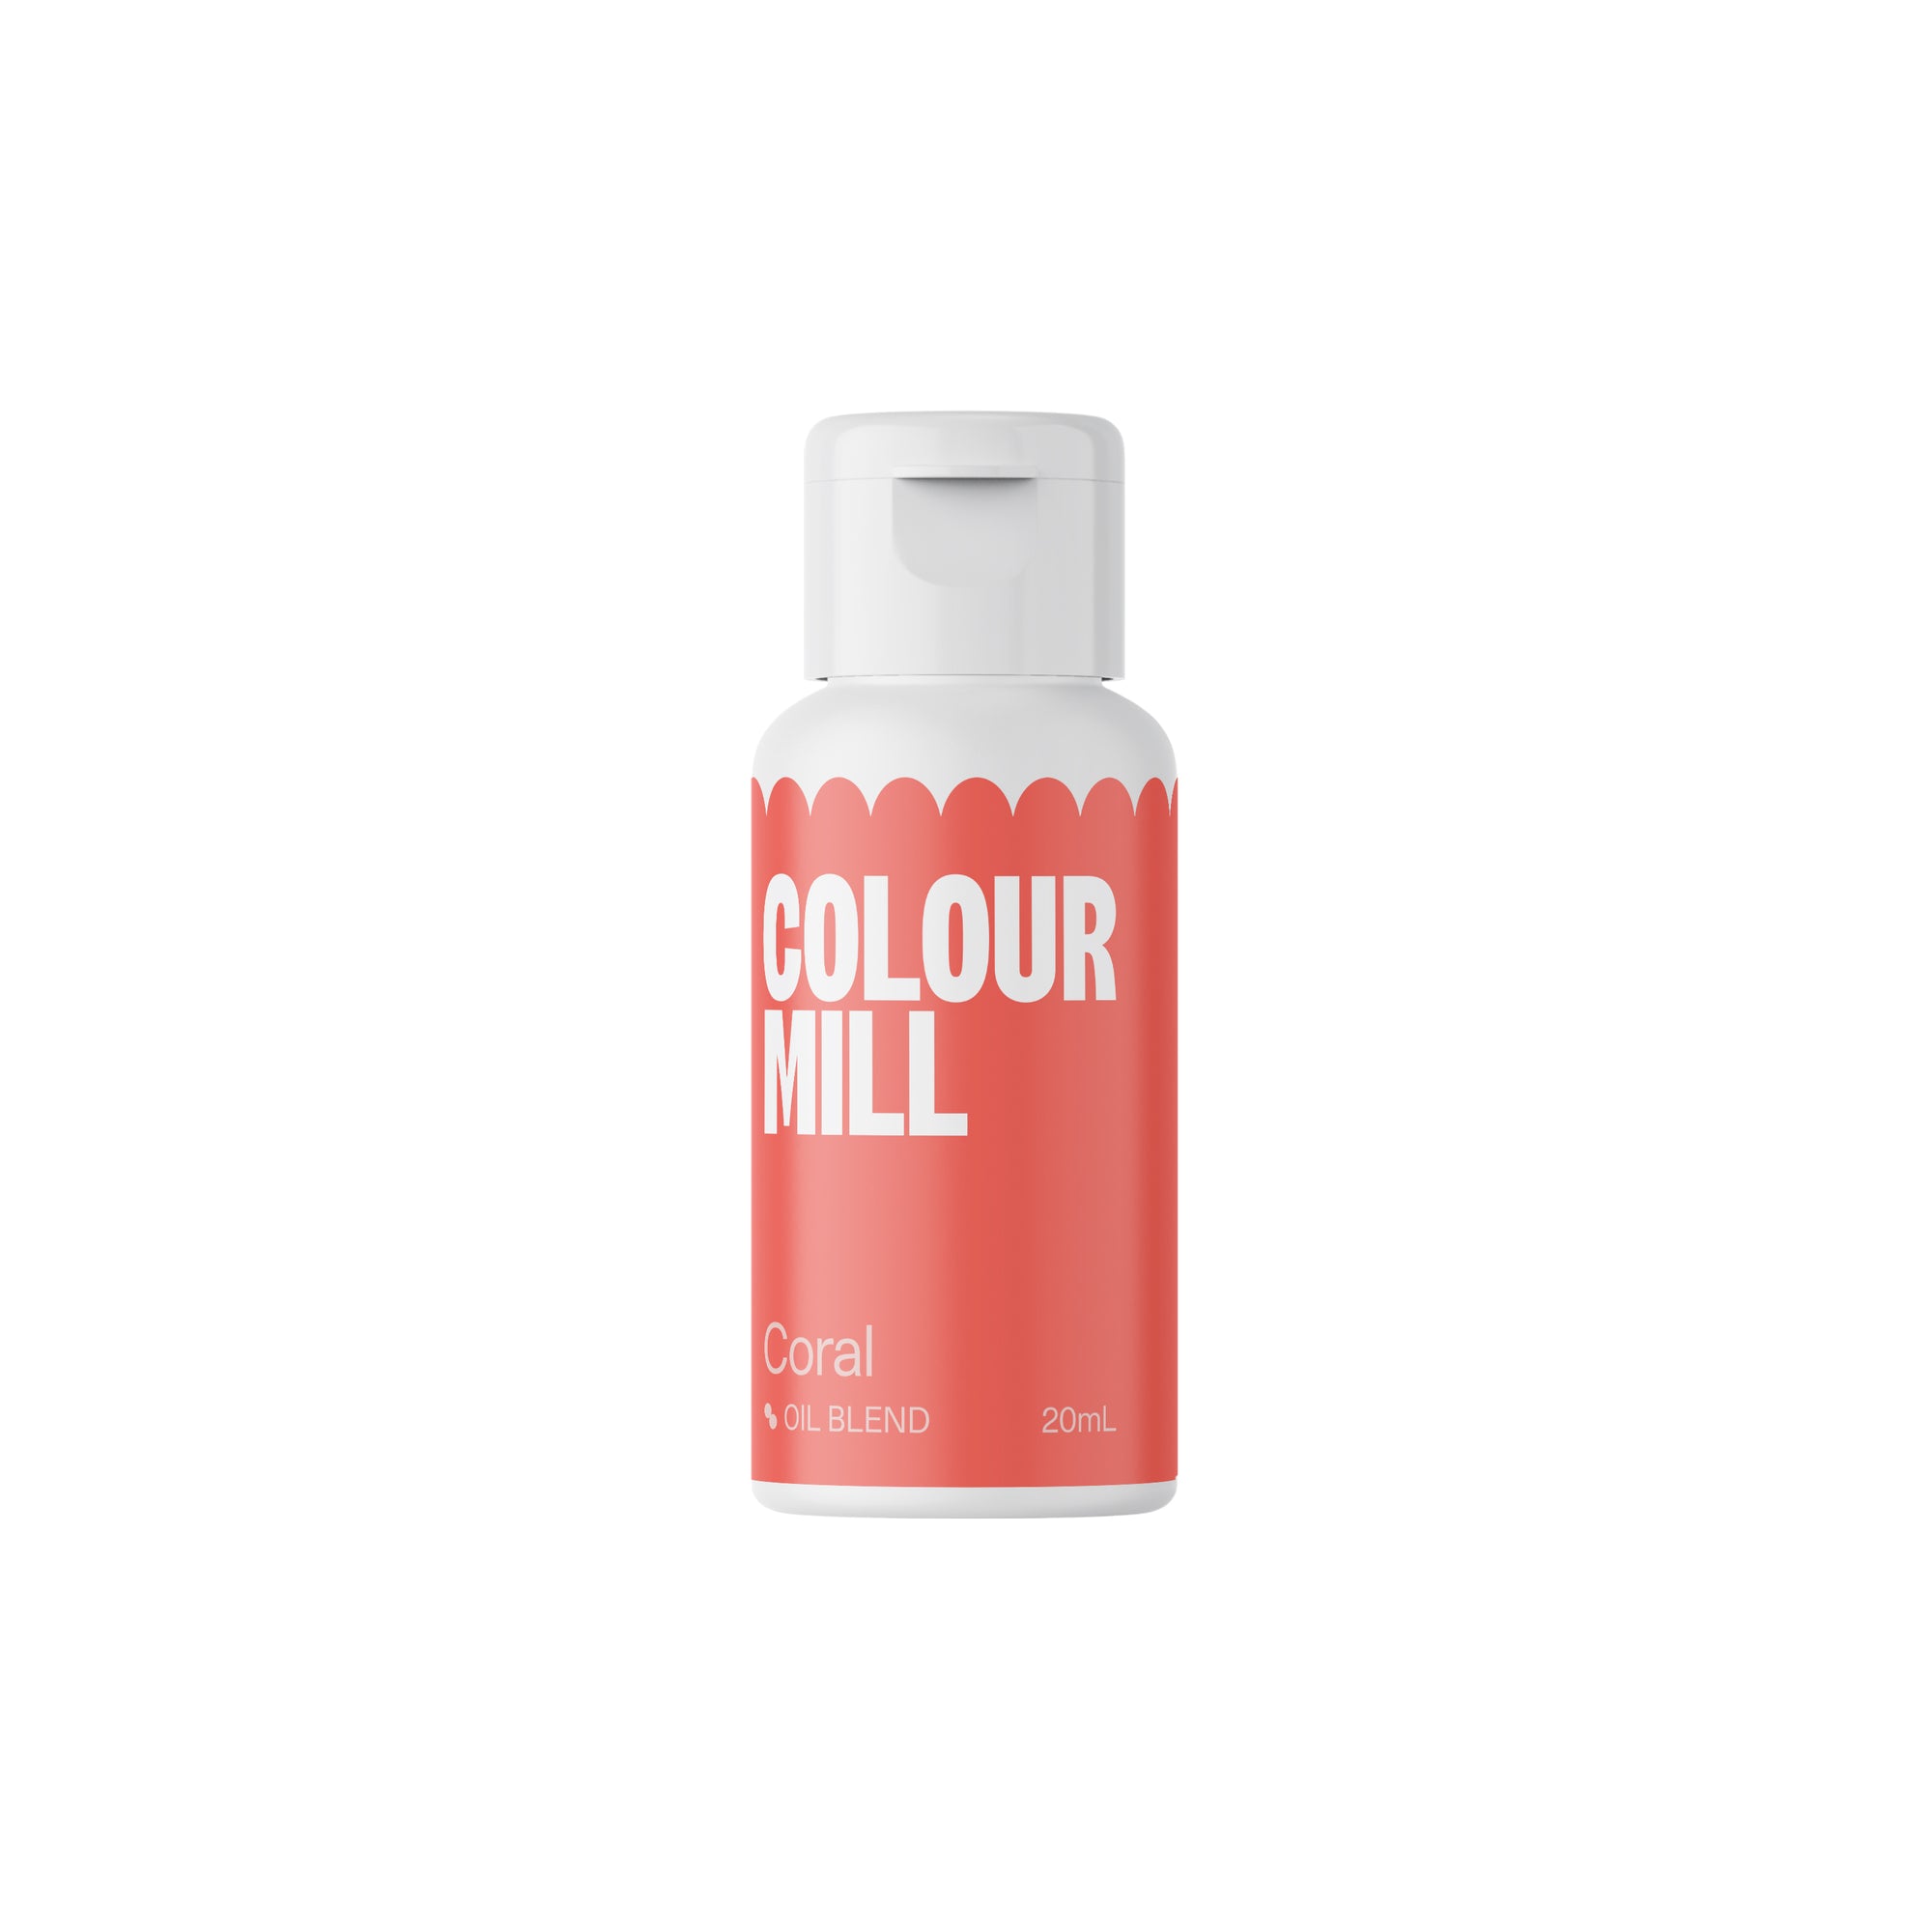 Colour Mill CORAL 20ml